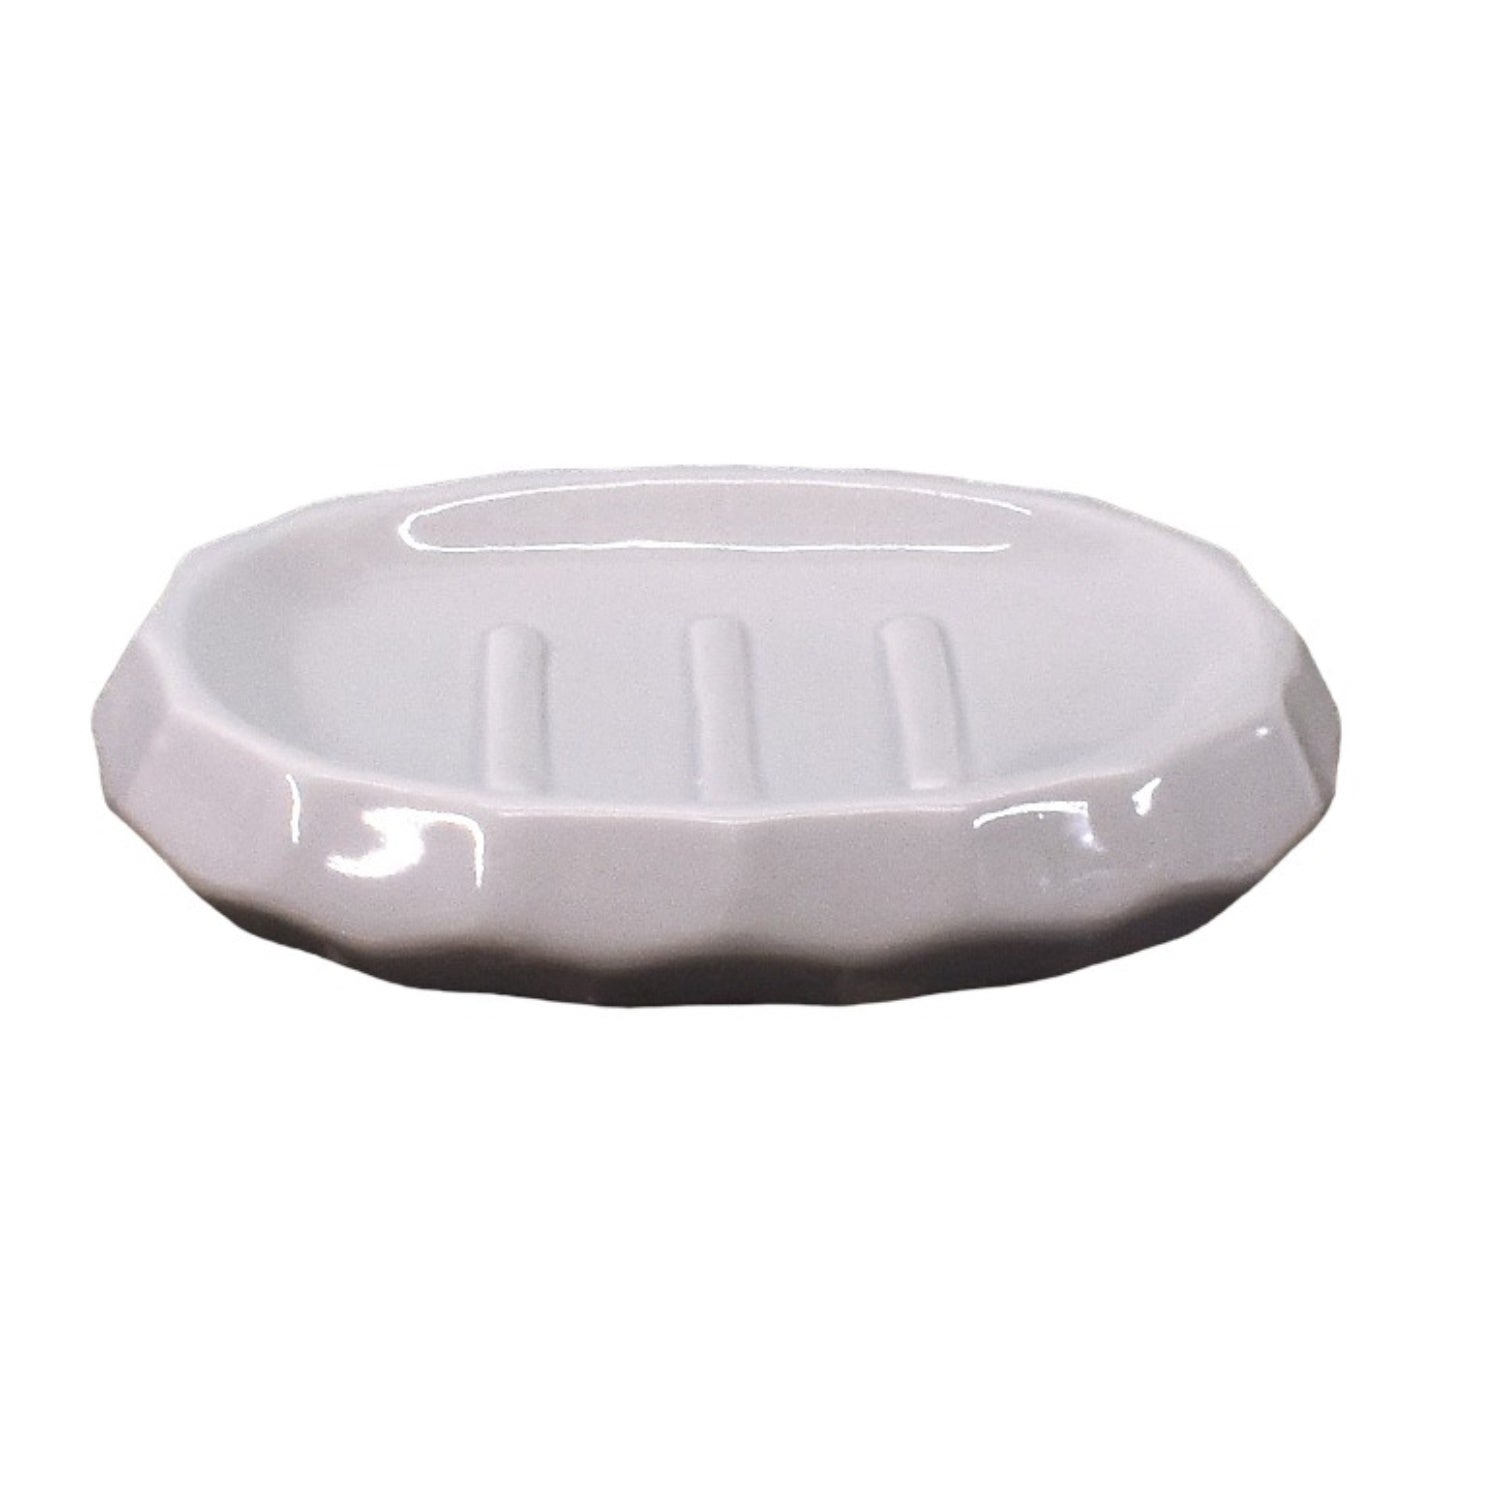 Ceramic Soap Dish Set of 1 Bathroom Accessories for Home (C1009)